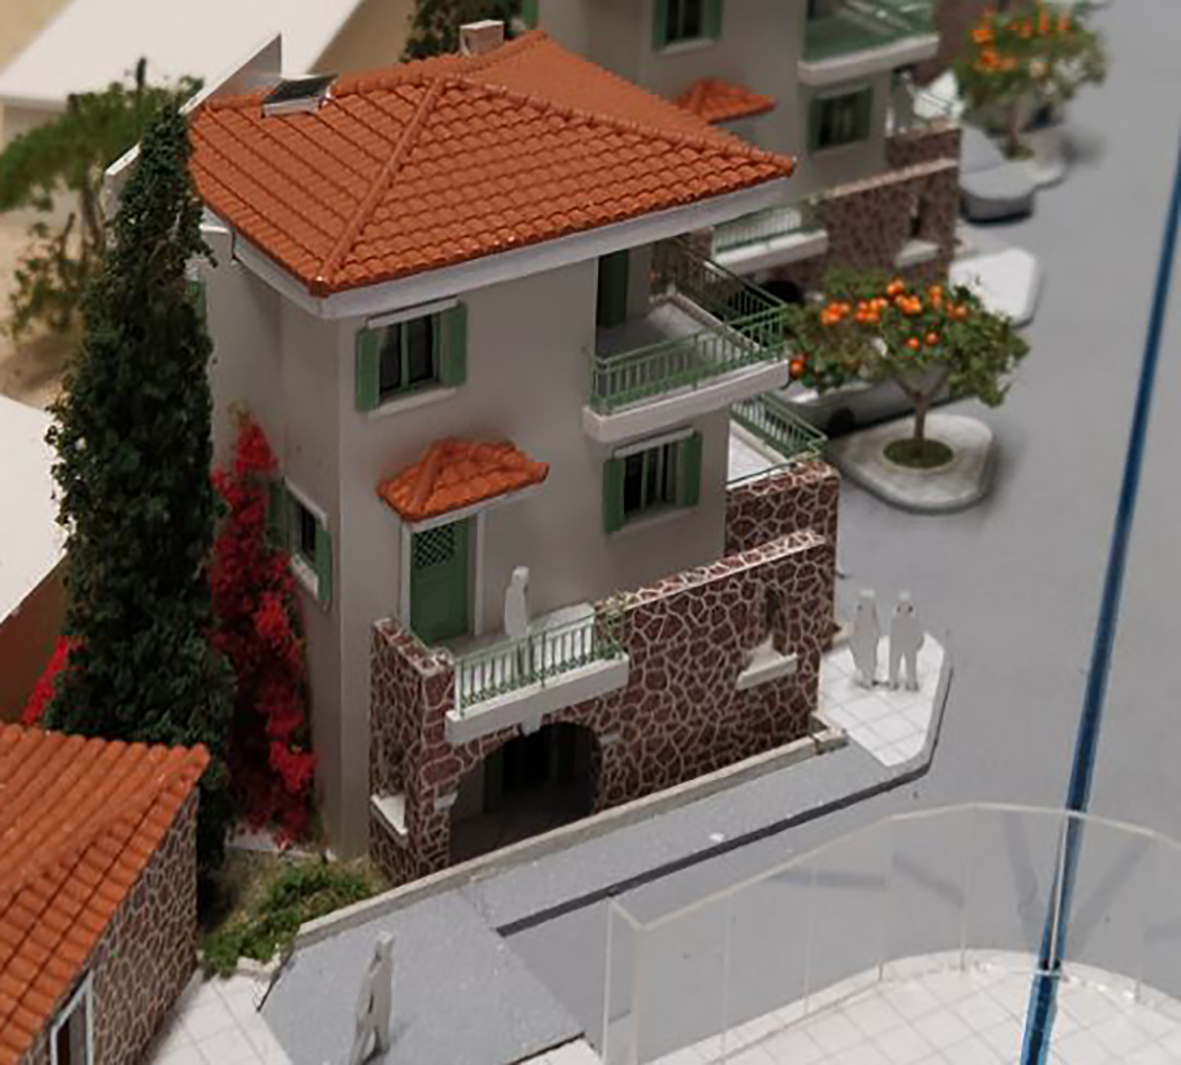 architectural model αρχιτεκτονικη μακετα συγκροτημα κατοικιων